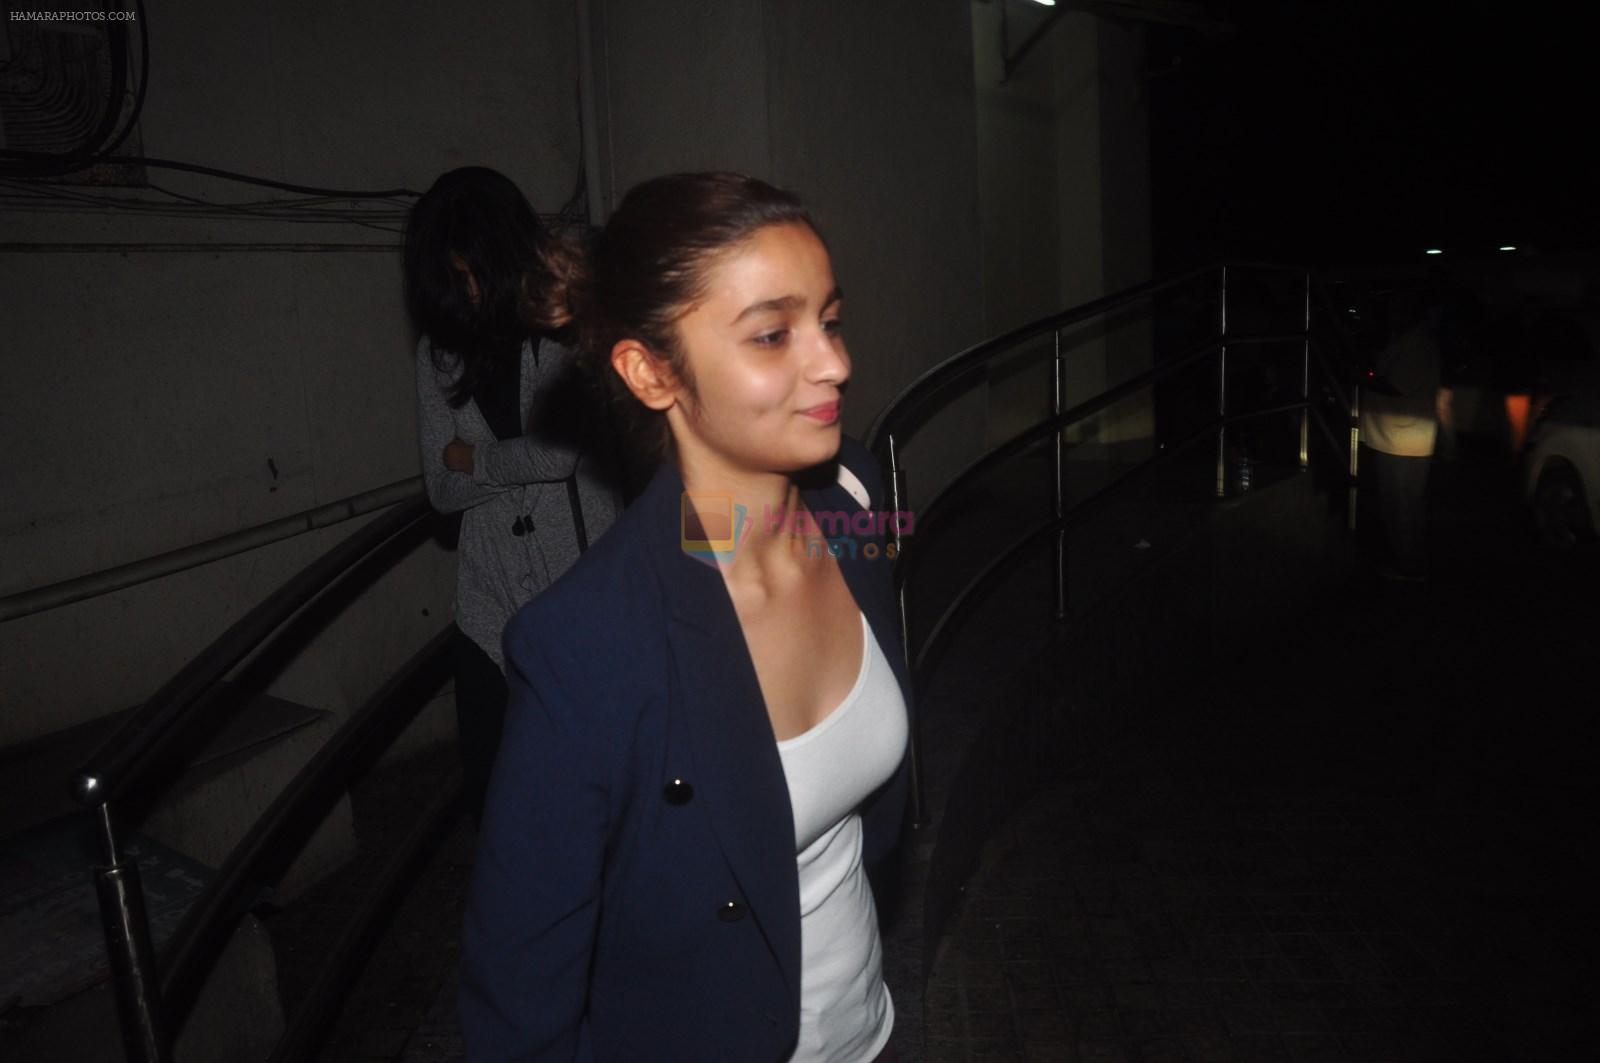 Alia Bhatt at pvr to watch badlpaur on 20th Feb 2015